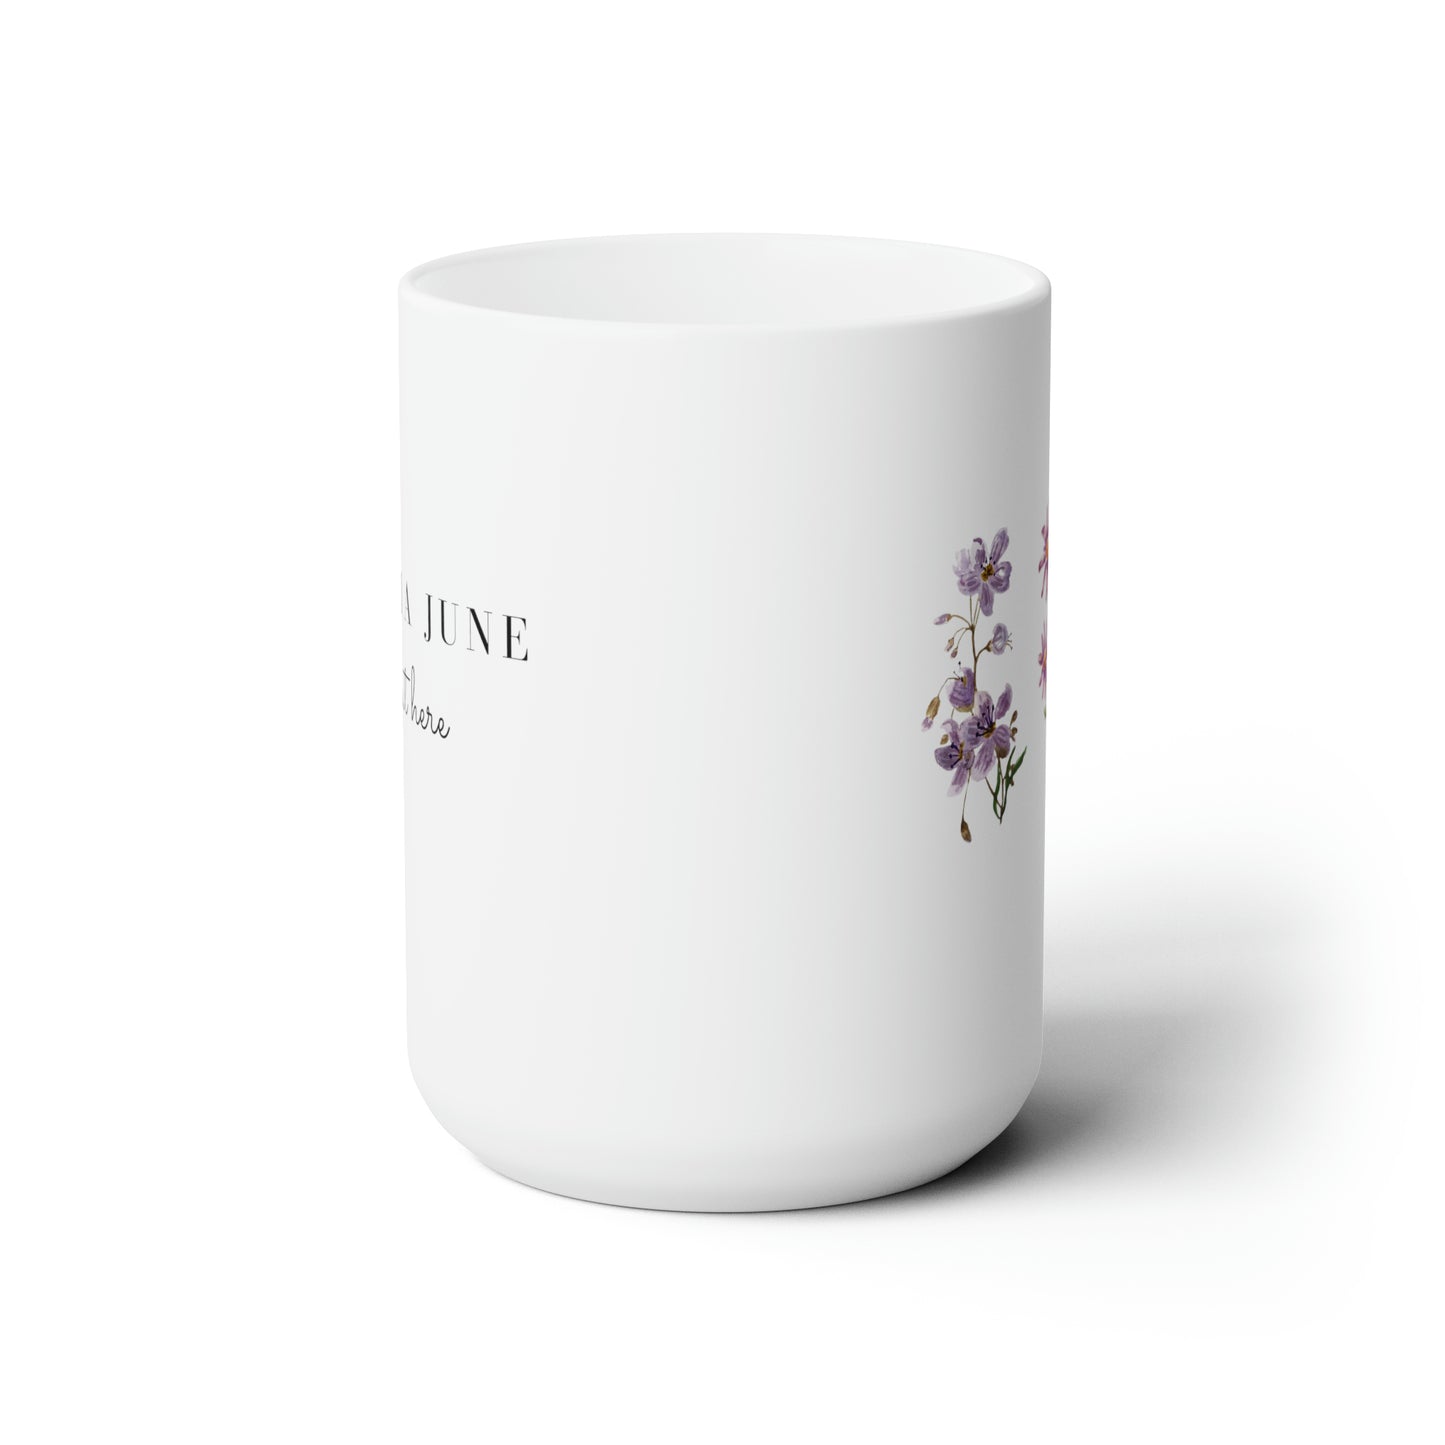 Grand Maa June Customise Ceramic Mug 15oz, White